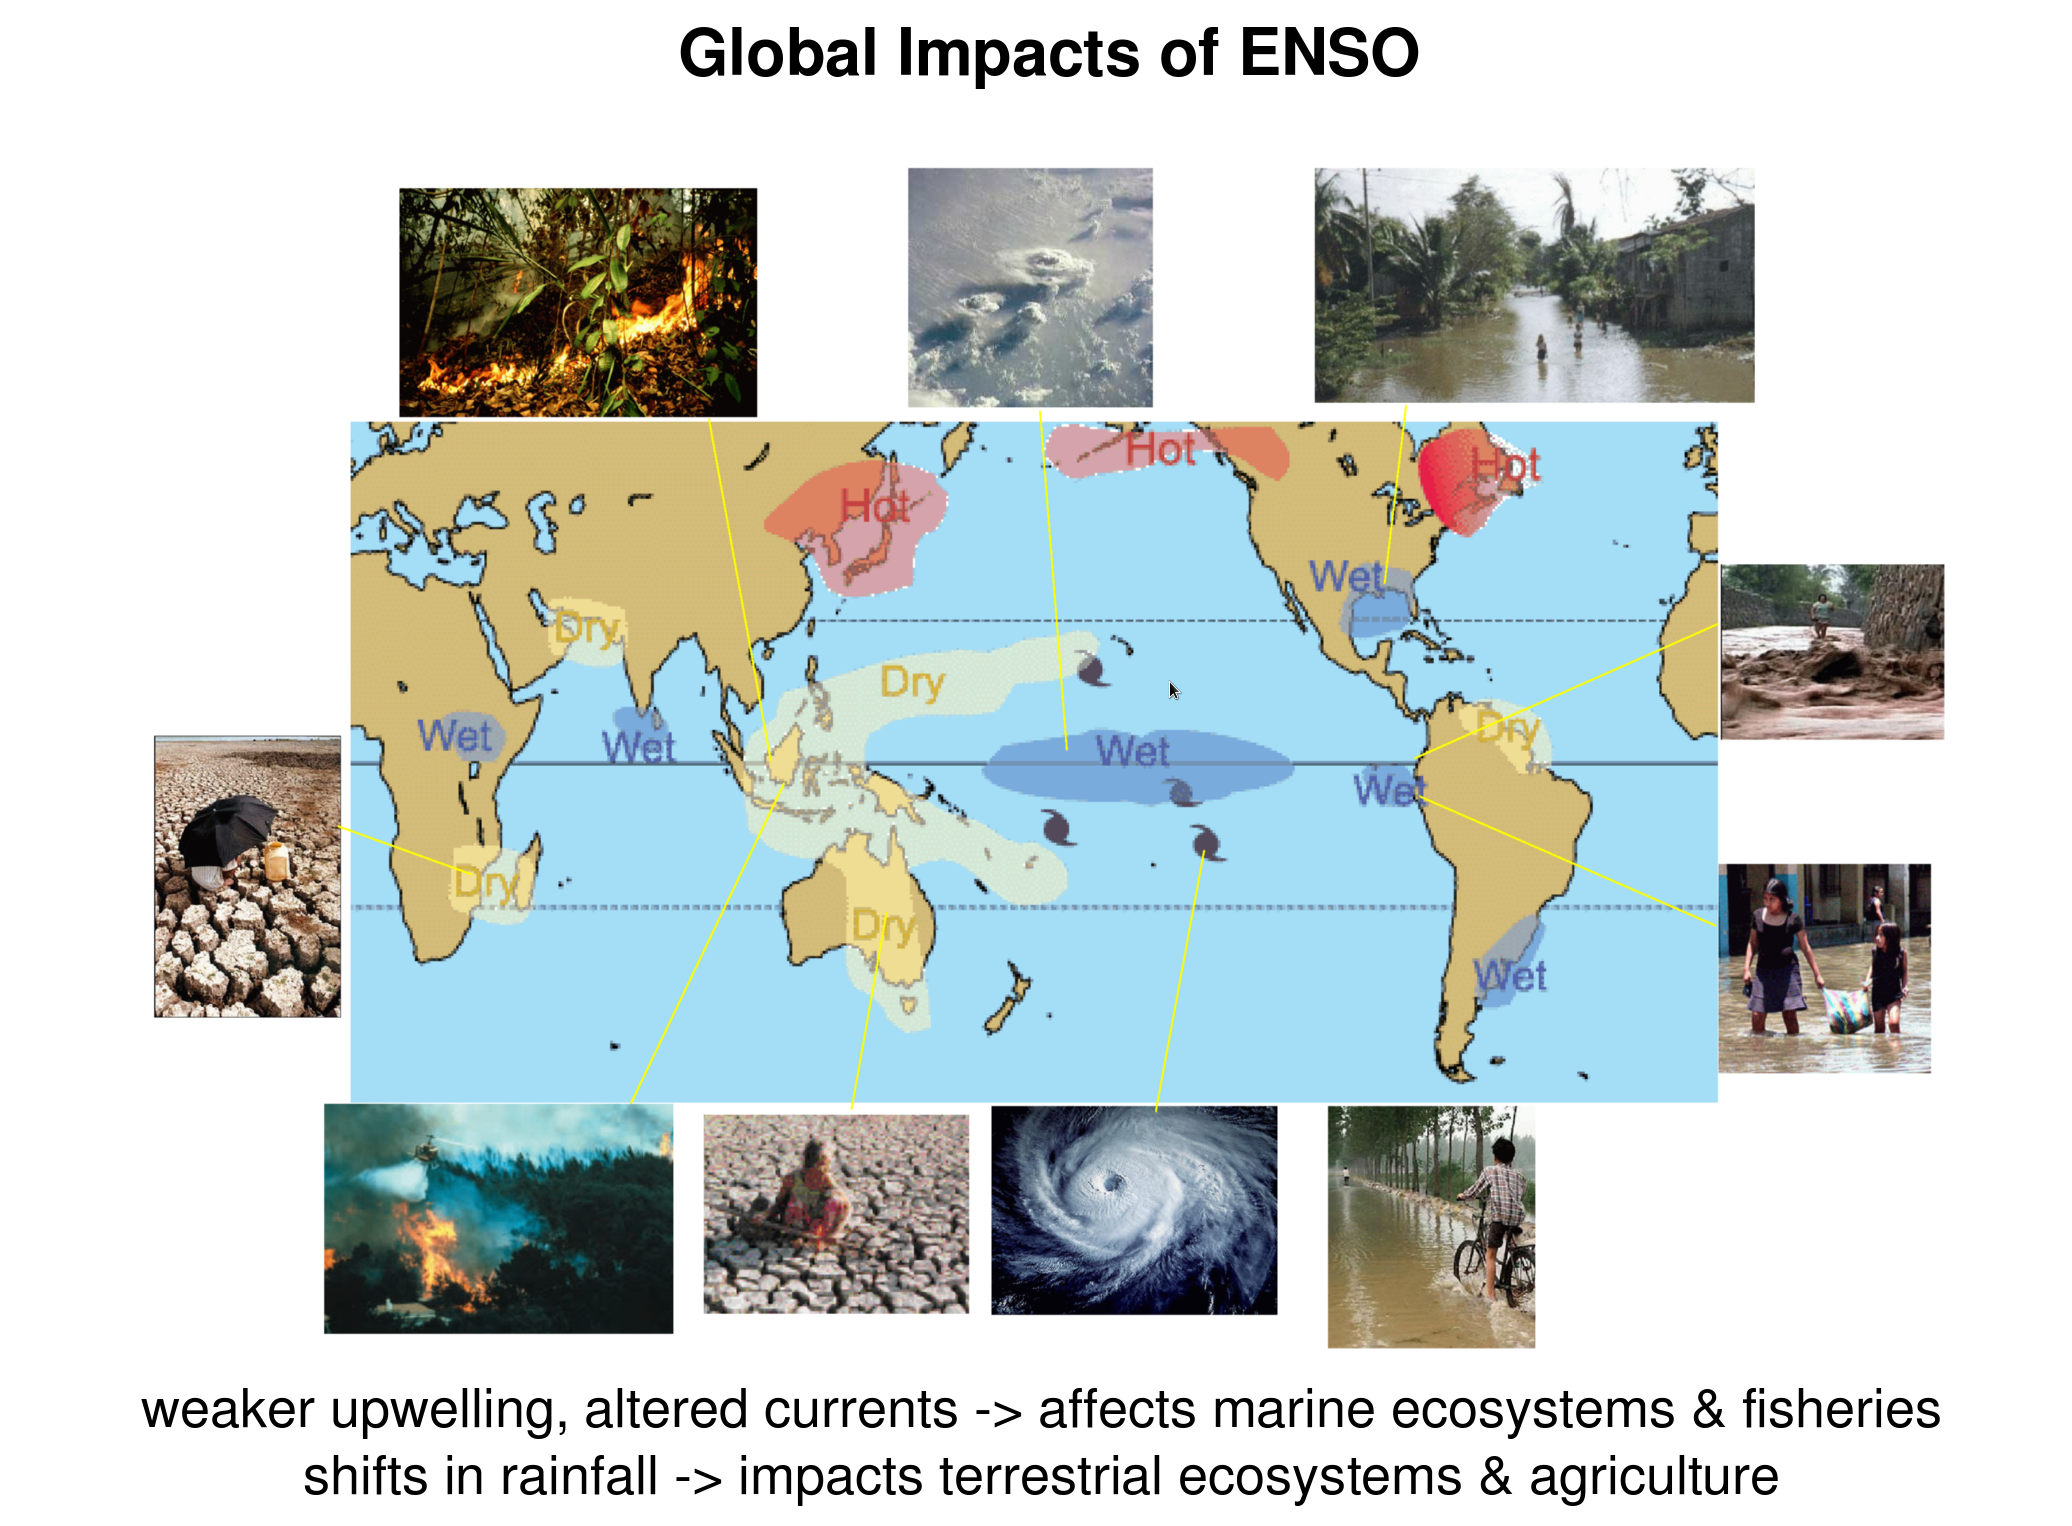 ENSO impacts